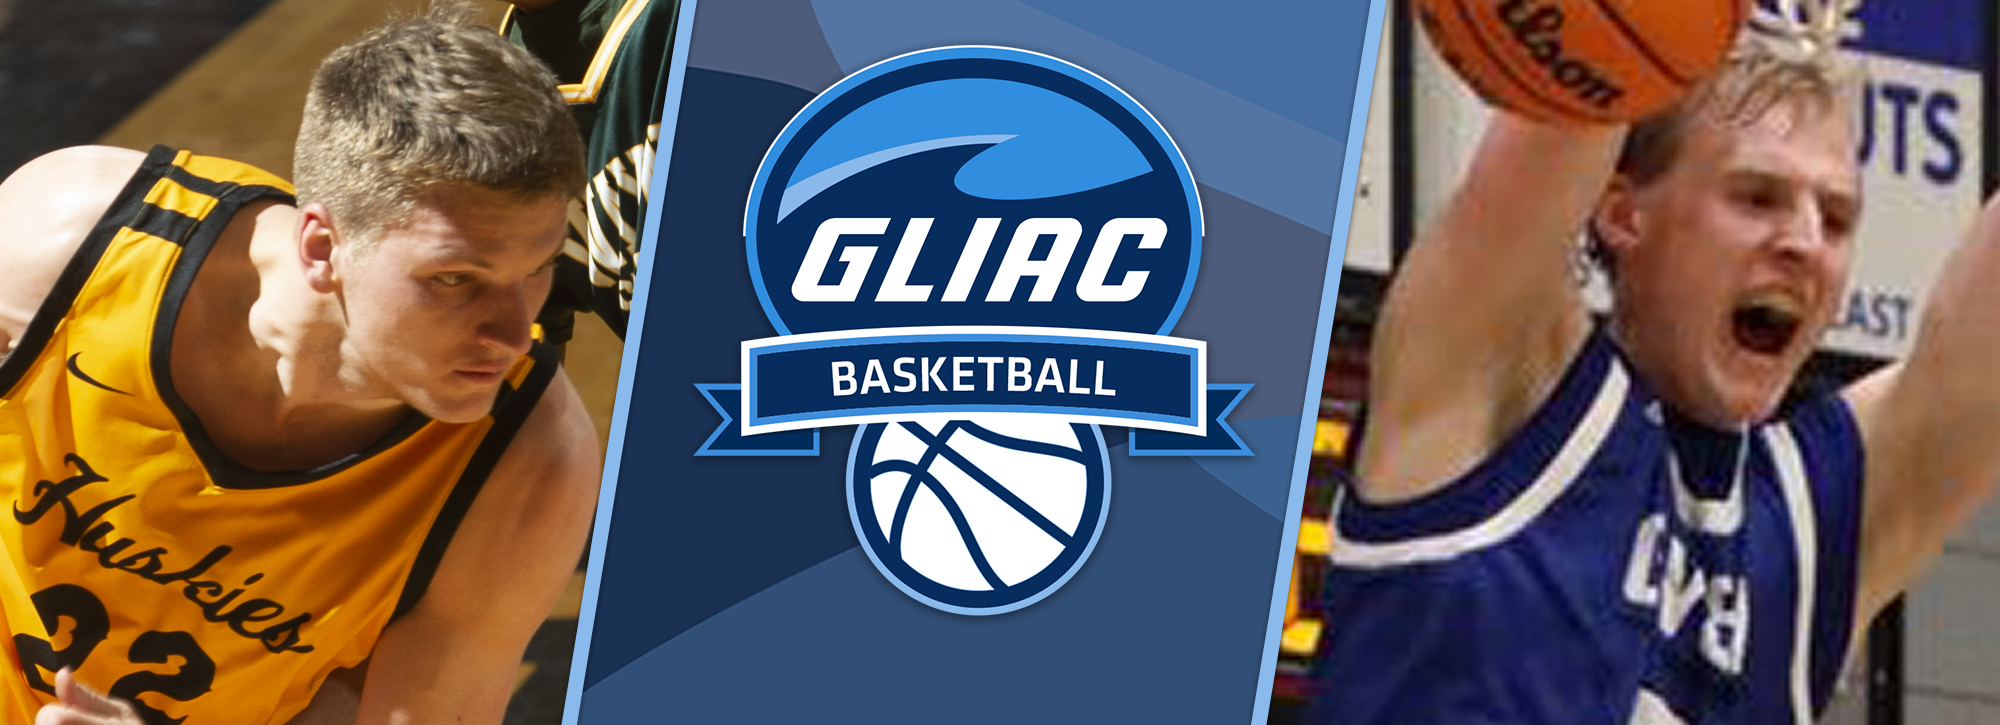 Tech's White and GVSU's Gassman earn GLIAC Men's Basketball Player of the Week accolades